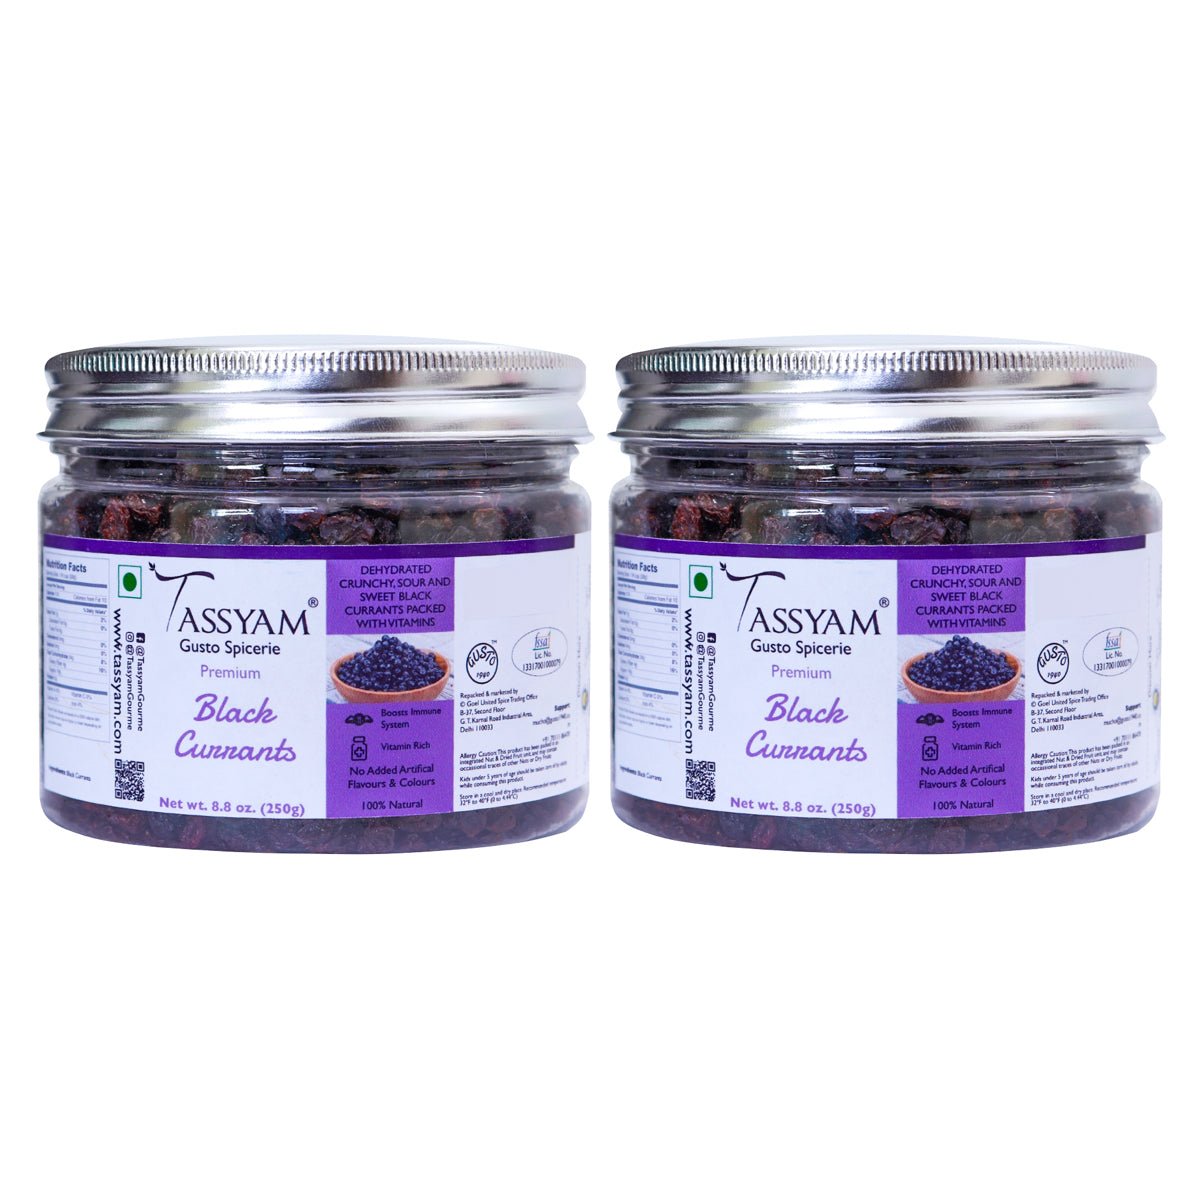 Black Currants - Tassyam Organics